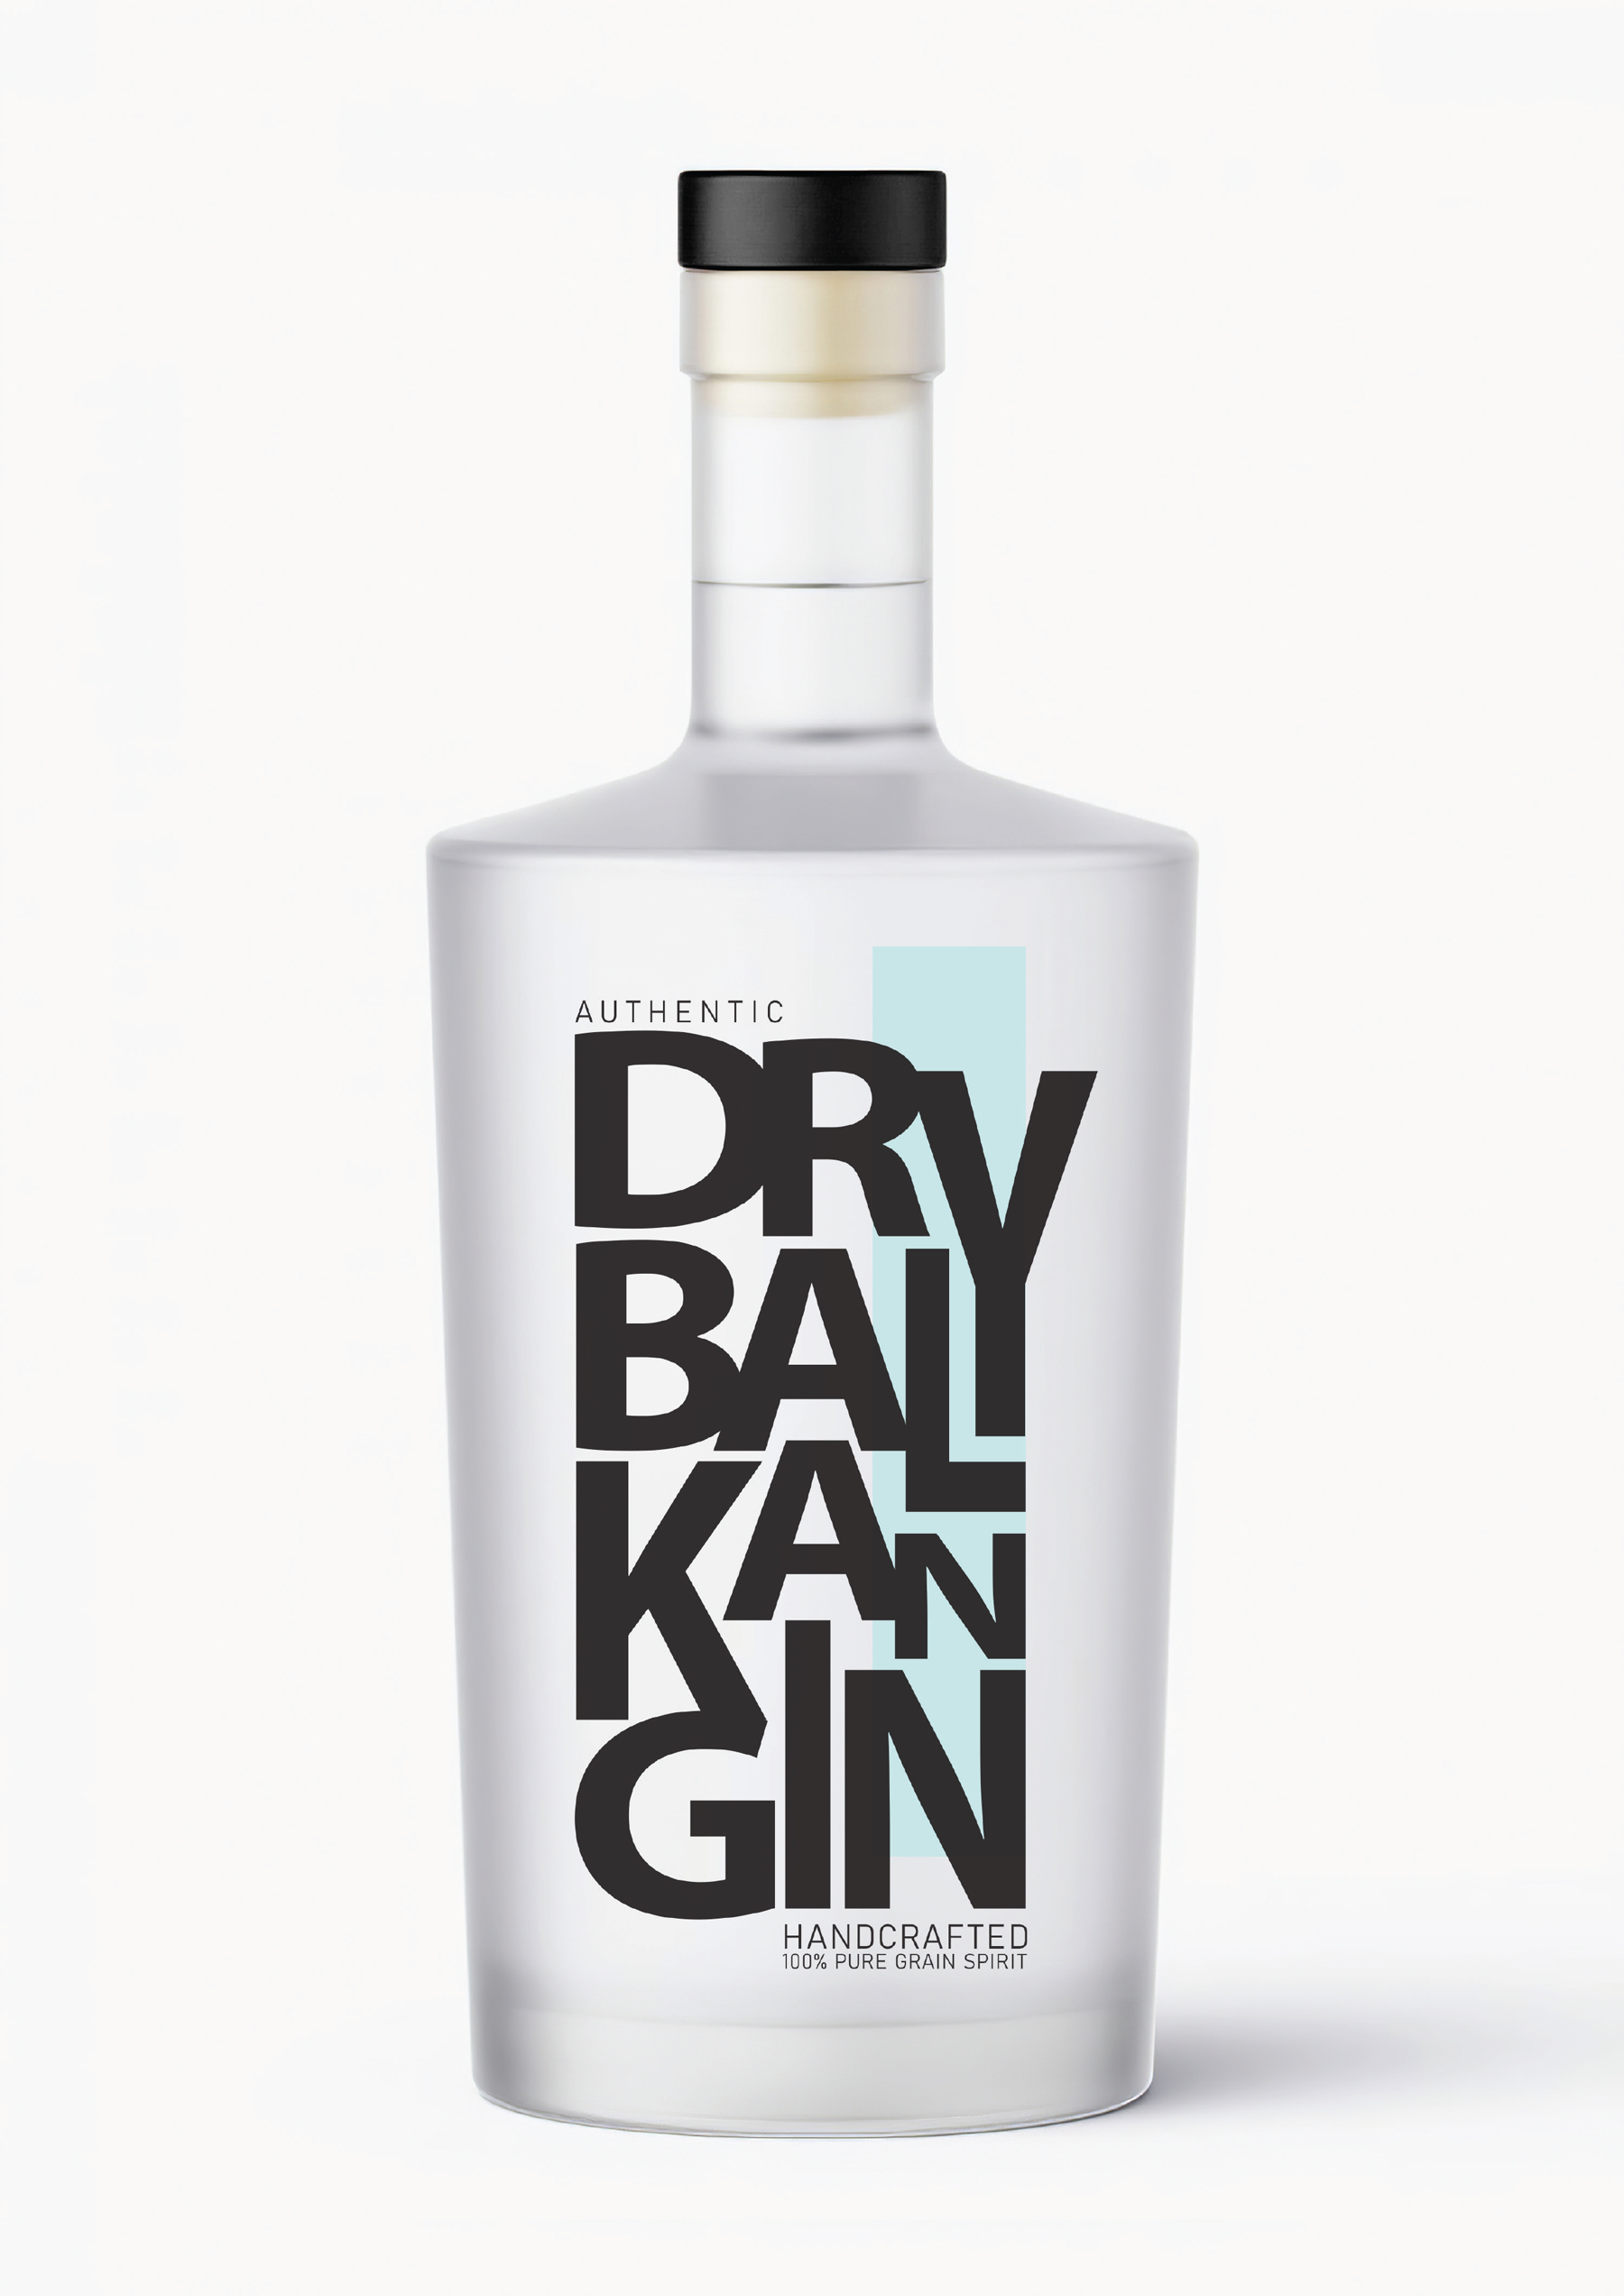 01 Authentic dry balkan gin